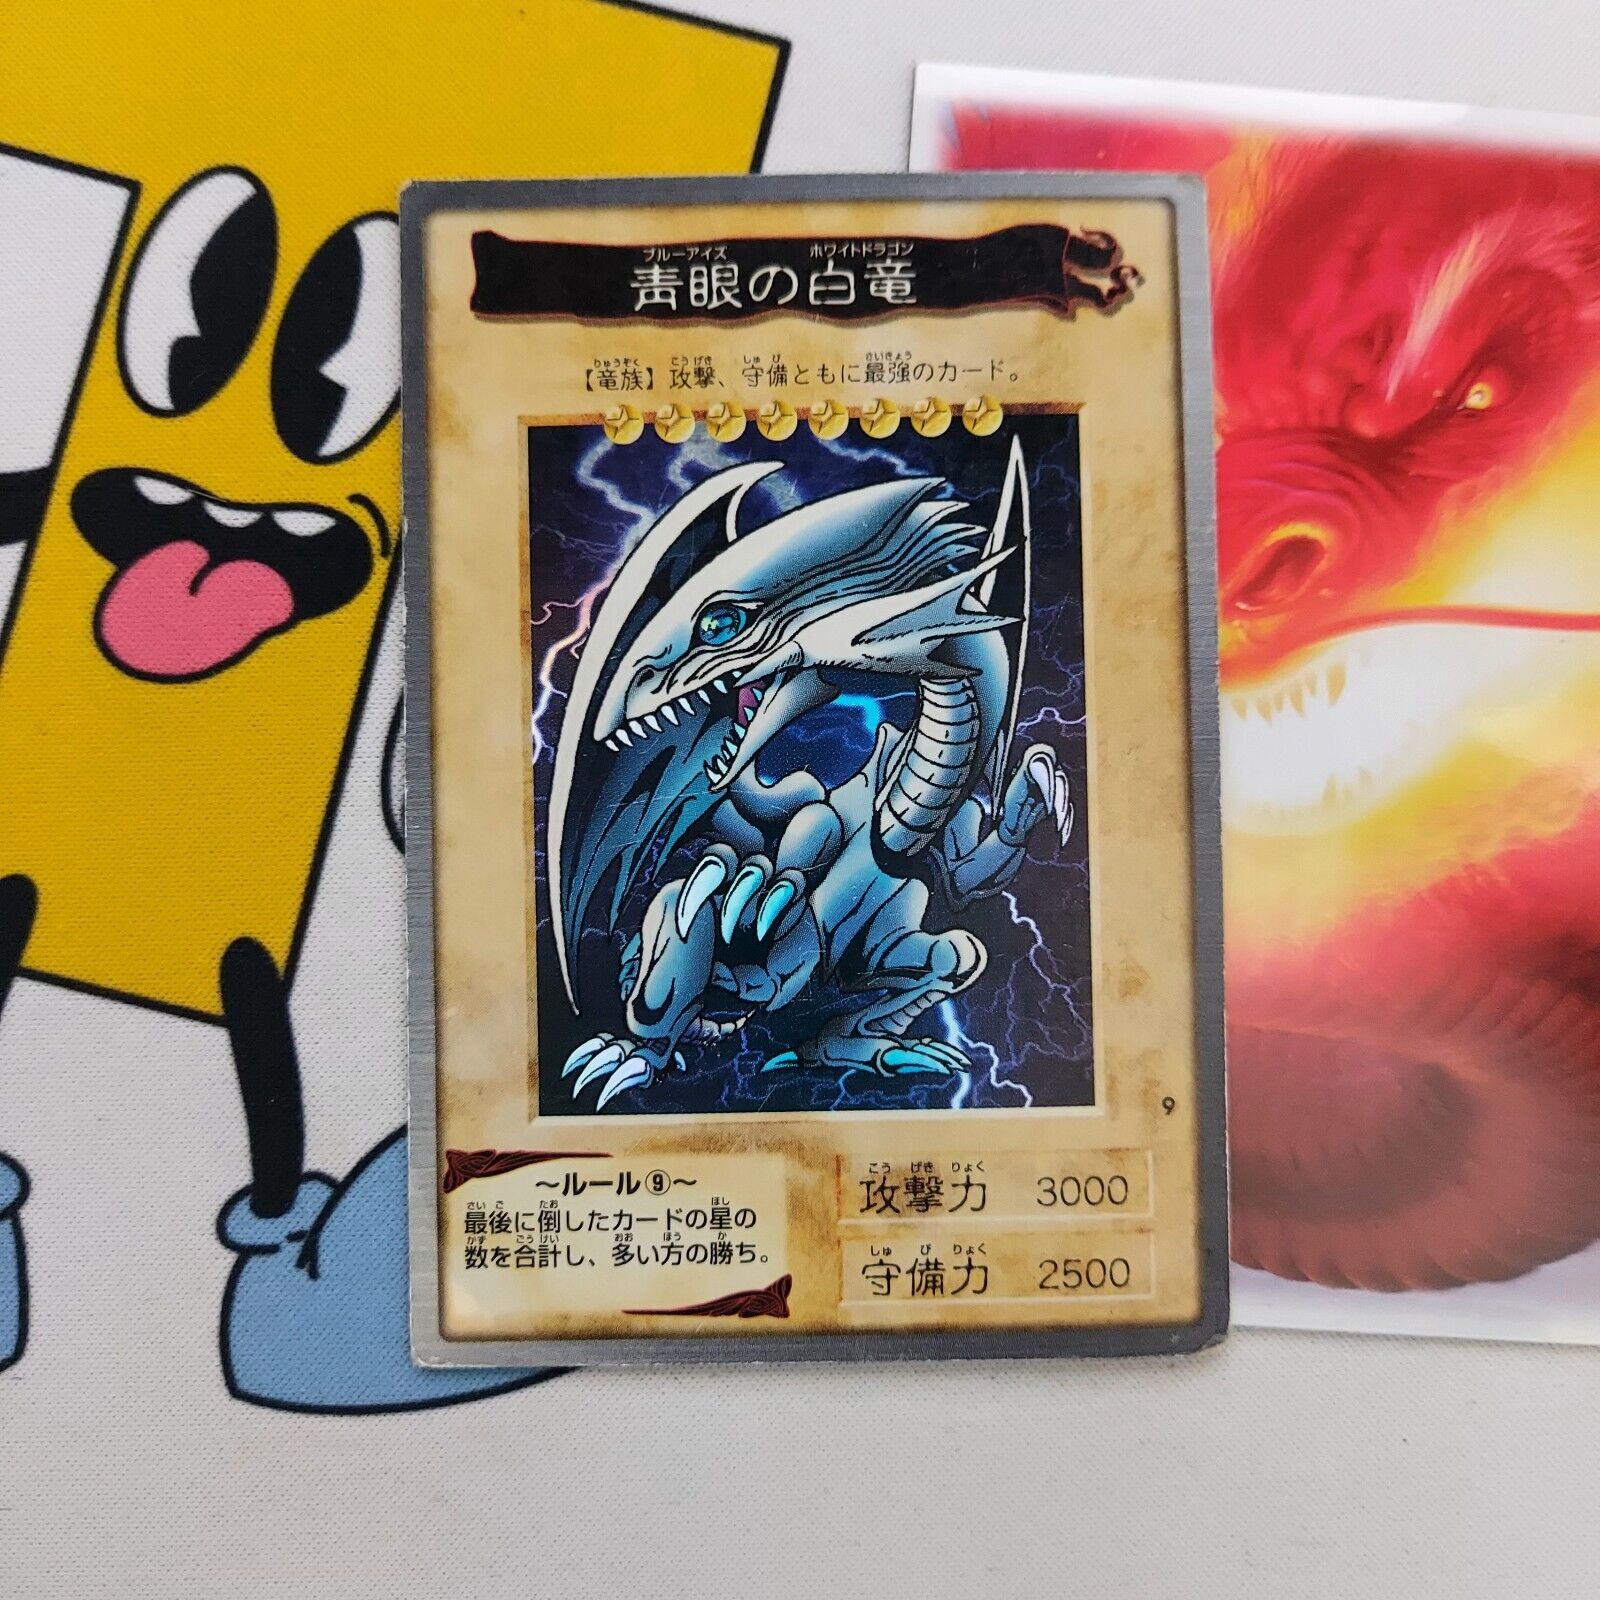 1998 YuGiOh Bandai 1st Gen Super Rare Blue-Eyes White Dragon No 9 Binder Card